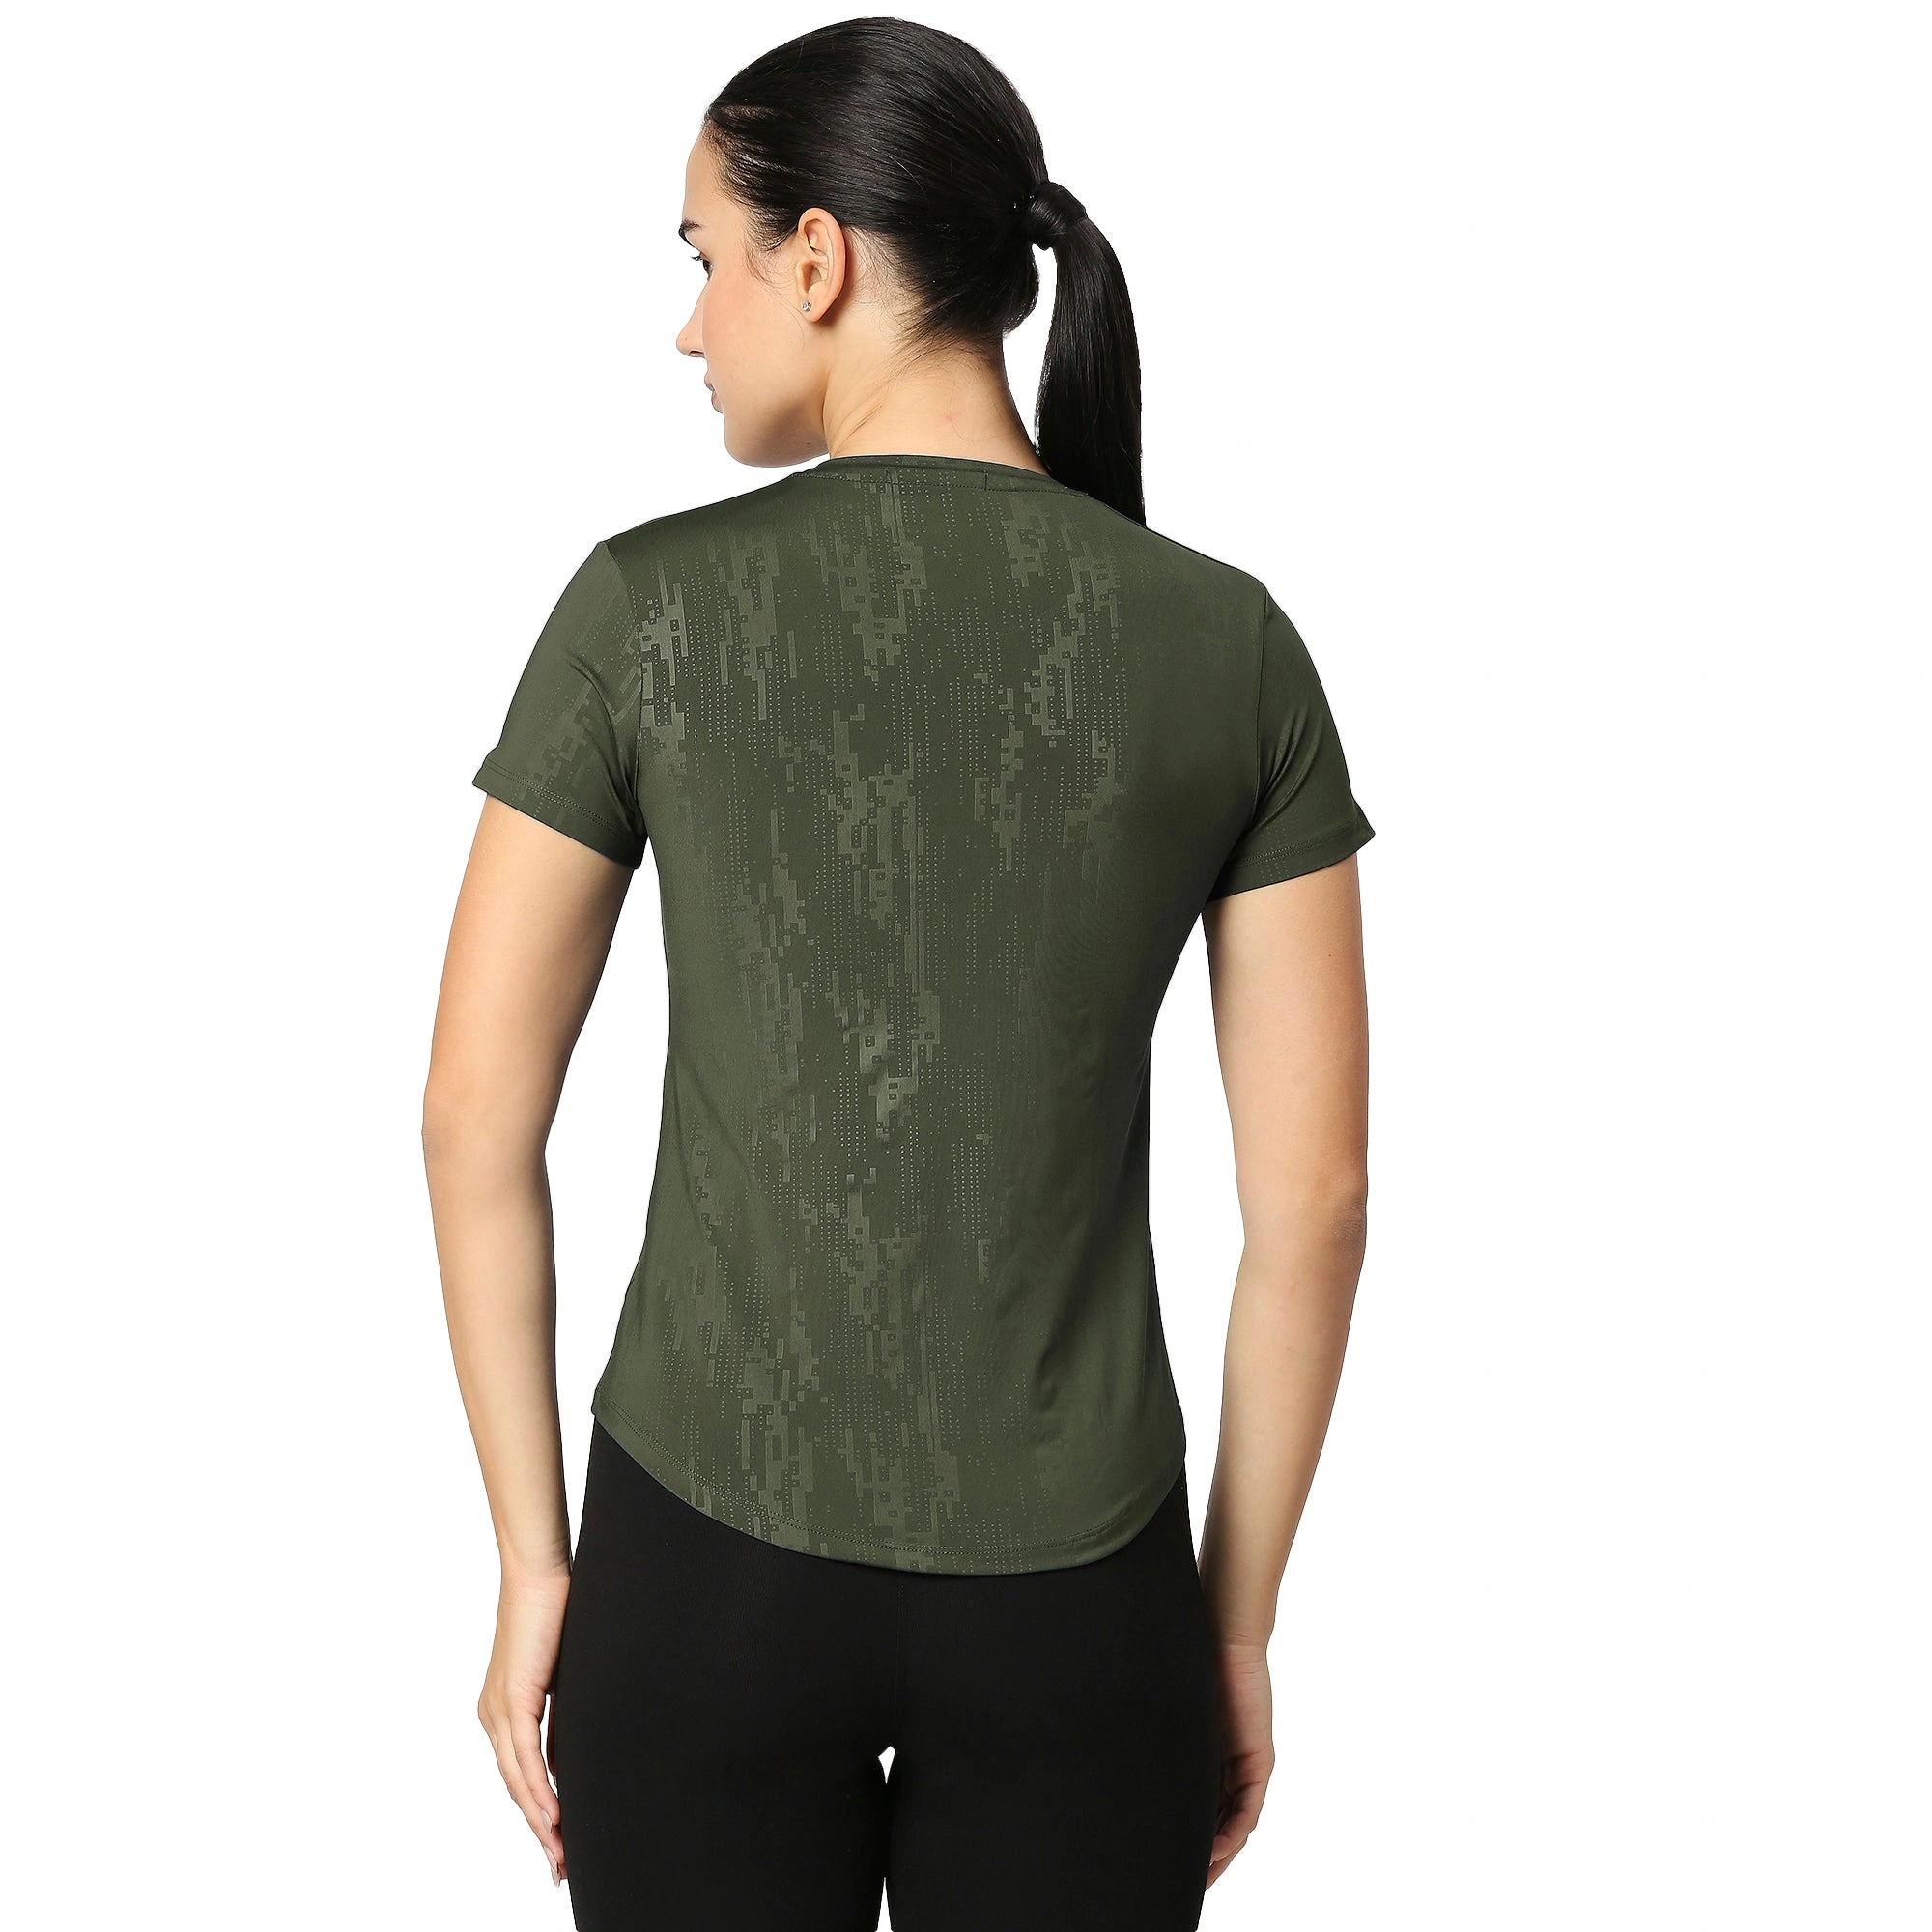 Curved Hem Emboss Print Gym Workout T-Shirt -OLIVE GREEN-S-3